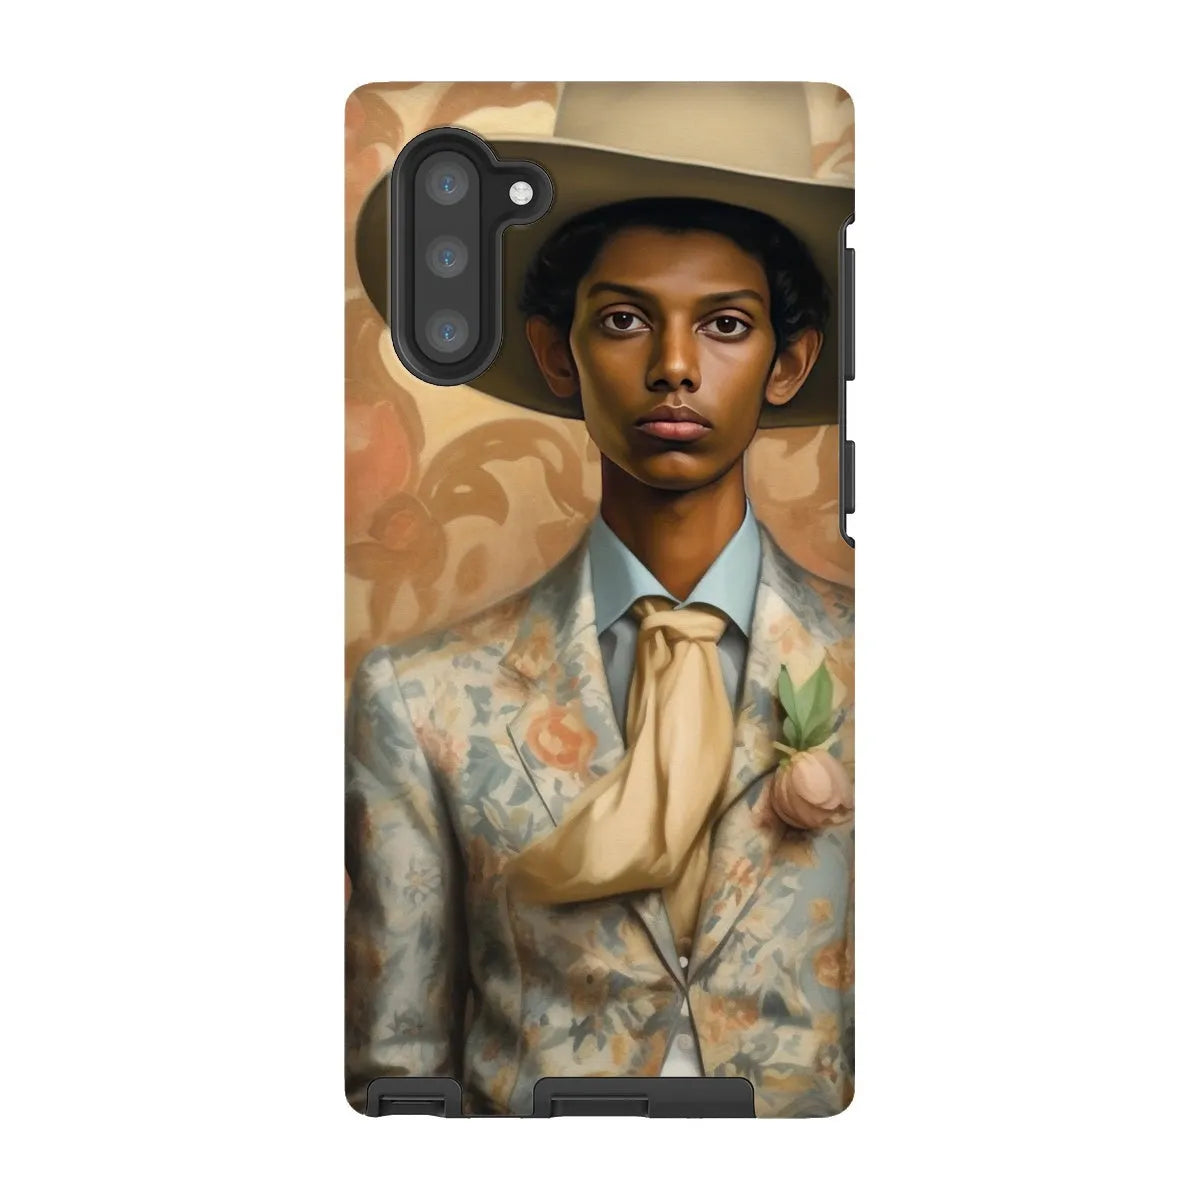 Mallaravan The Transgender Cowboy - F2m Dandy Art Phone Case - Samsung Galaxy Note 10 / Matte - Mobile Phone Cases